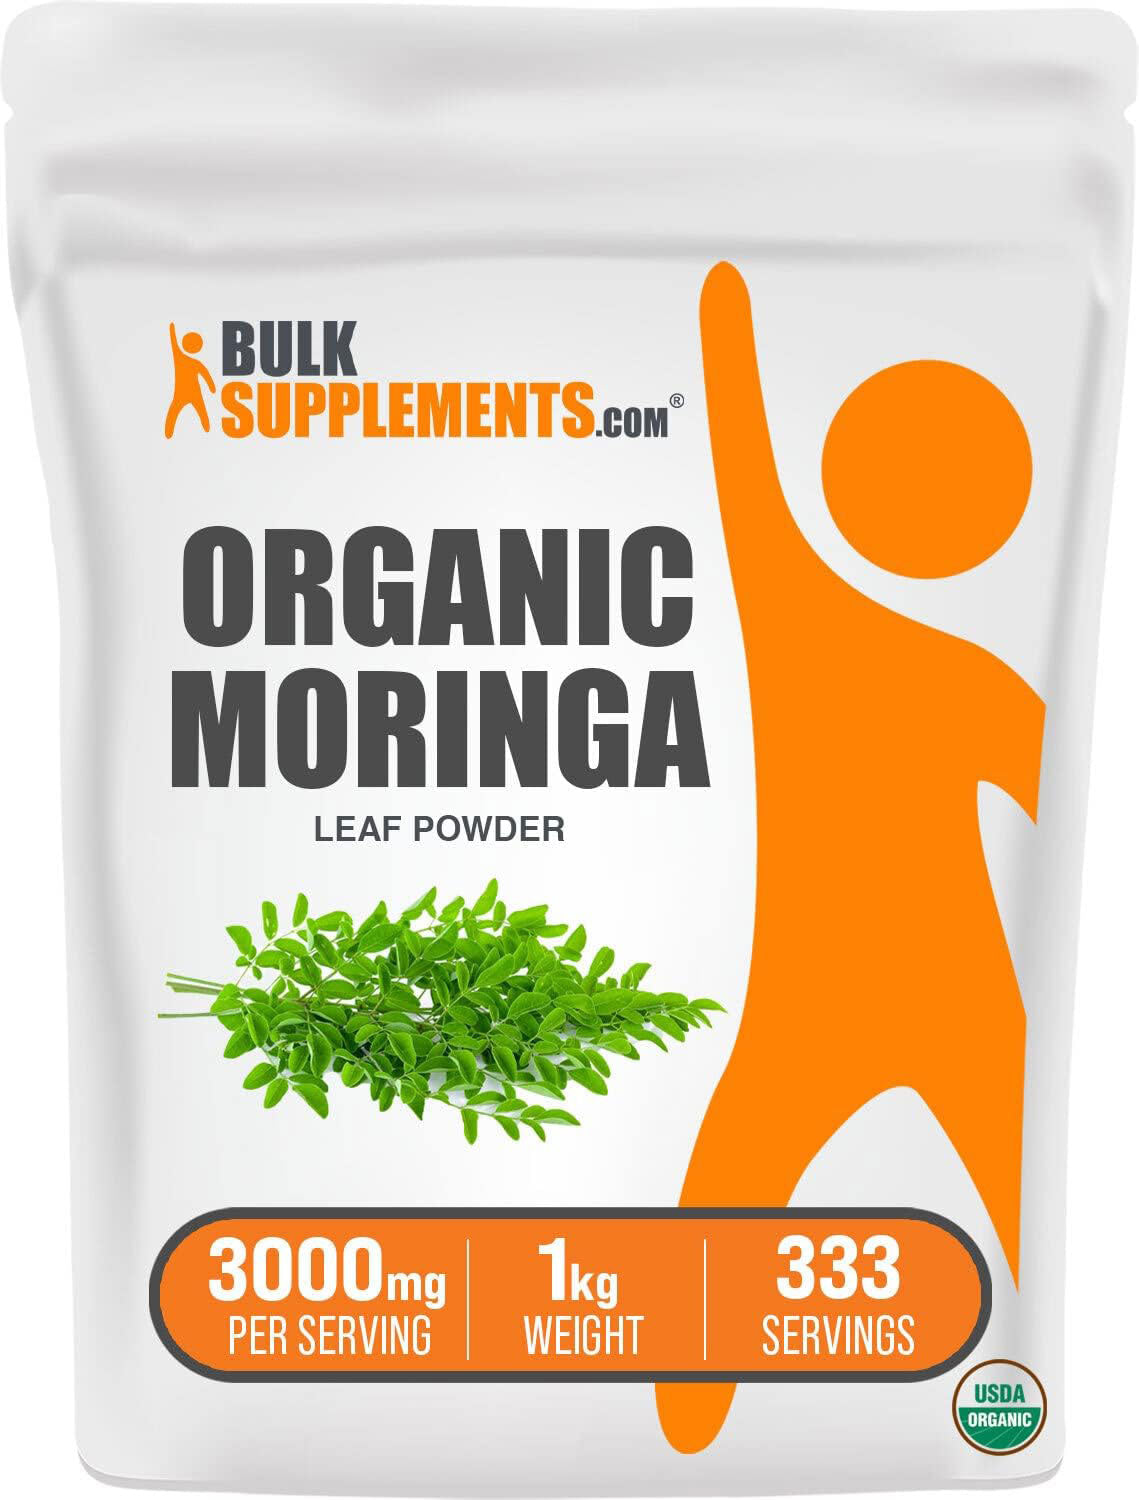 BulkSupplements Organic Moringa Leaf Powder 1kg Bag